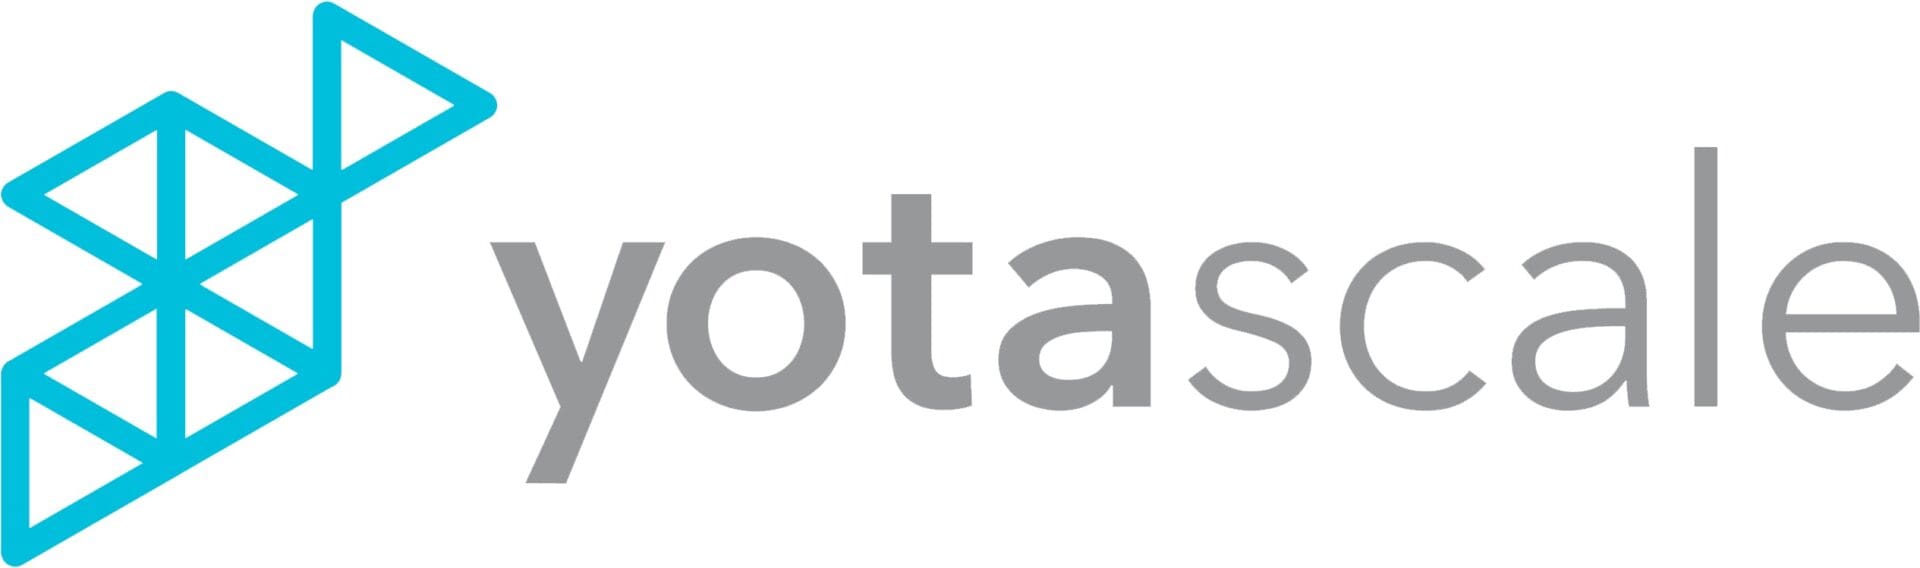 Yotascale-Logo Jpeg